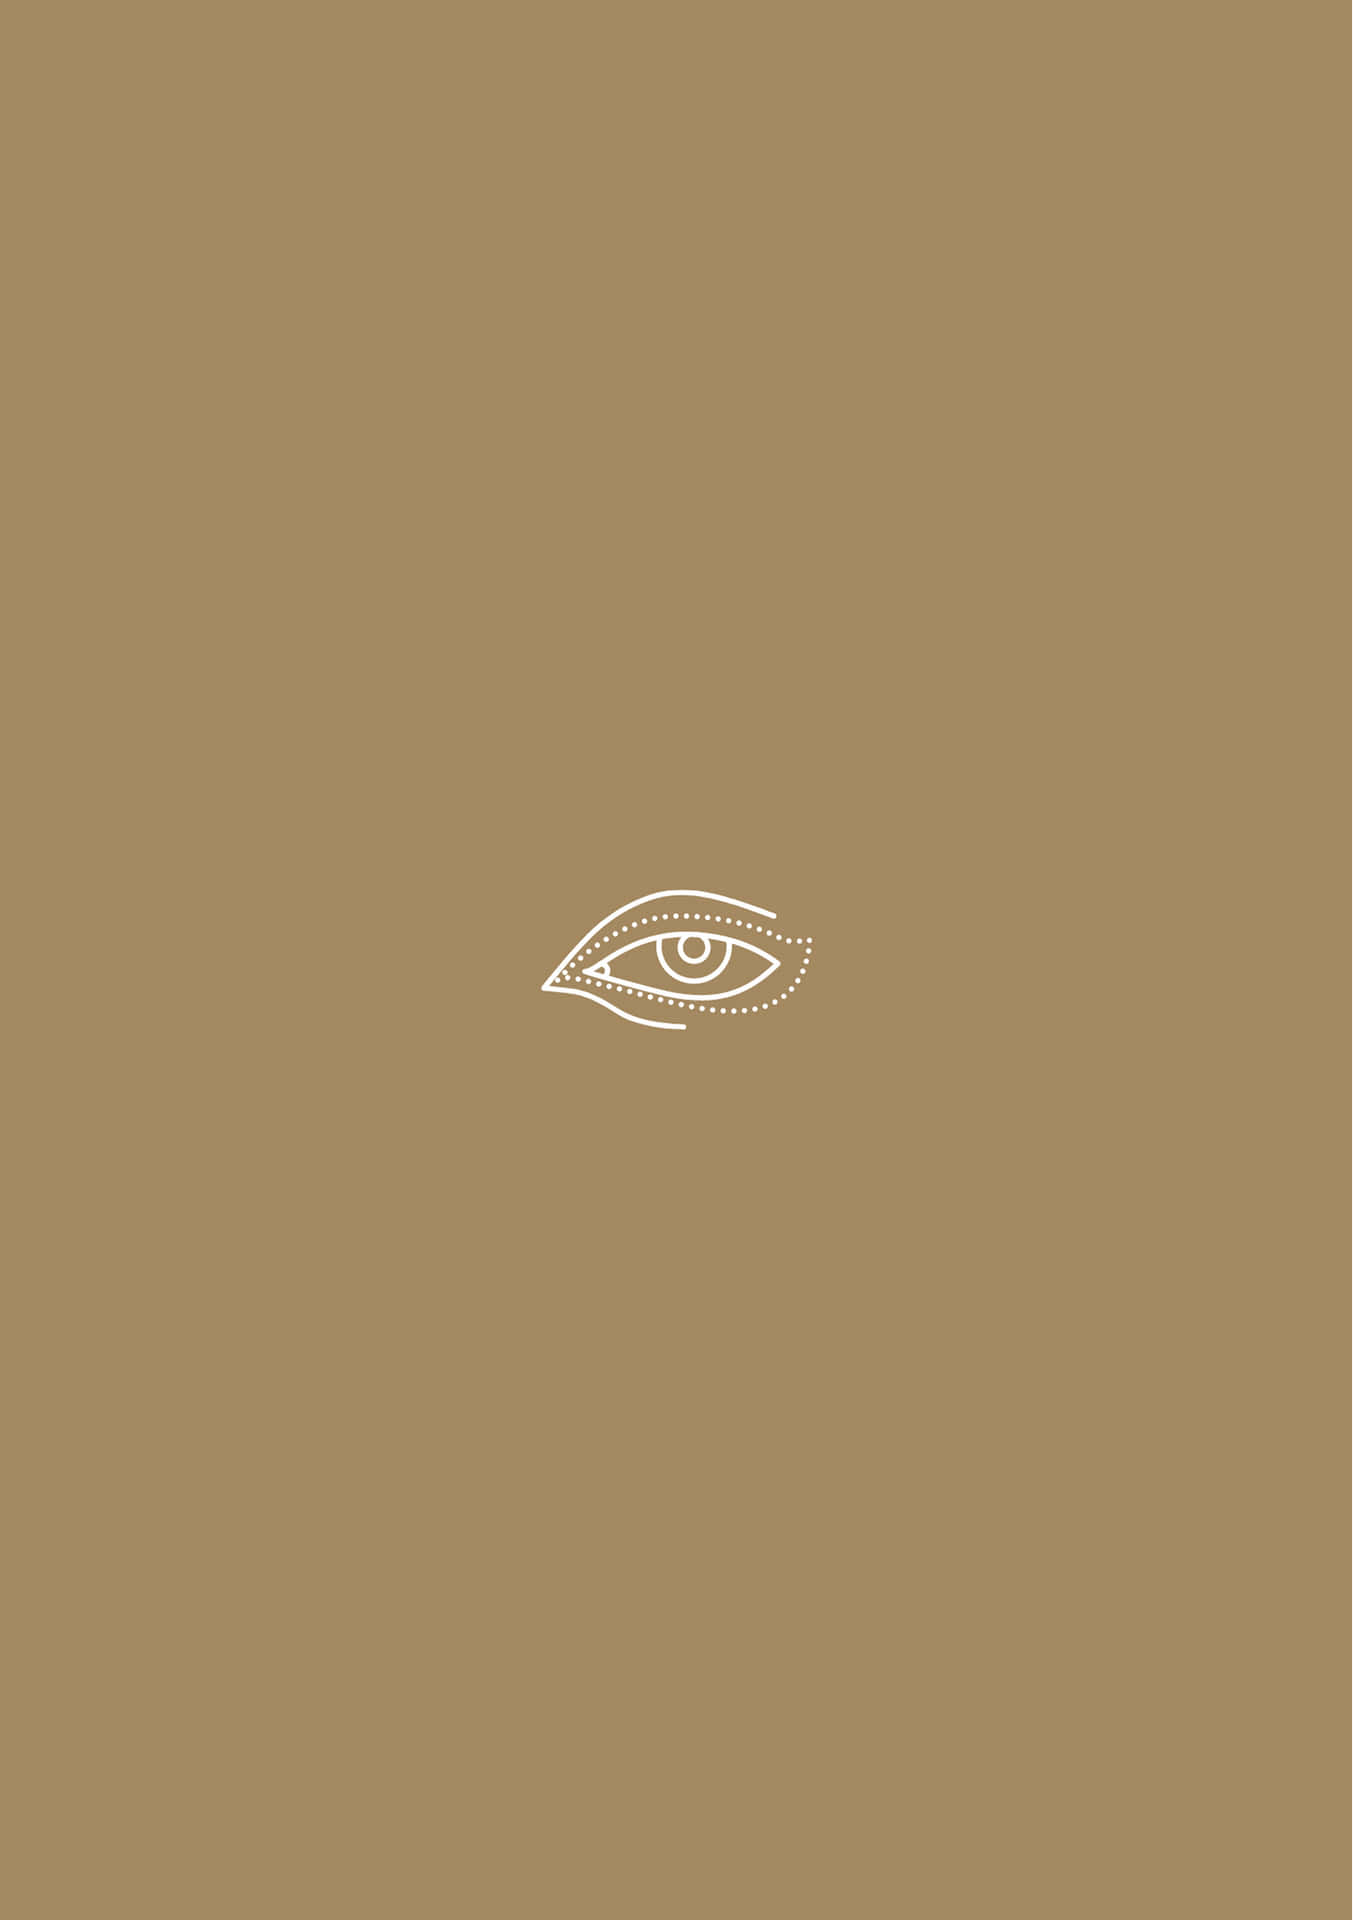 A minimalist logo design for an eye clinic - Pastel minimalist